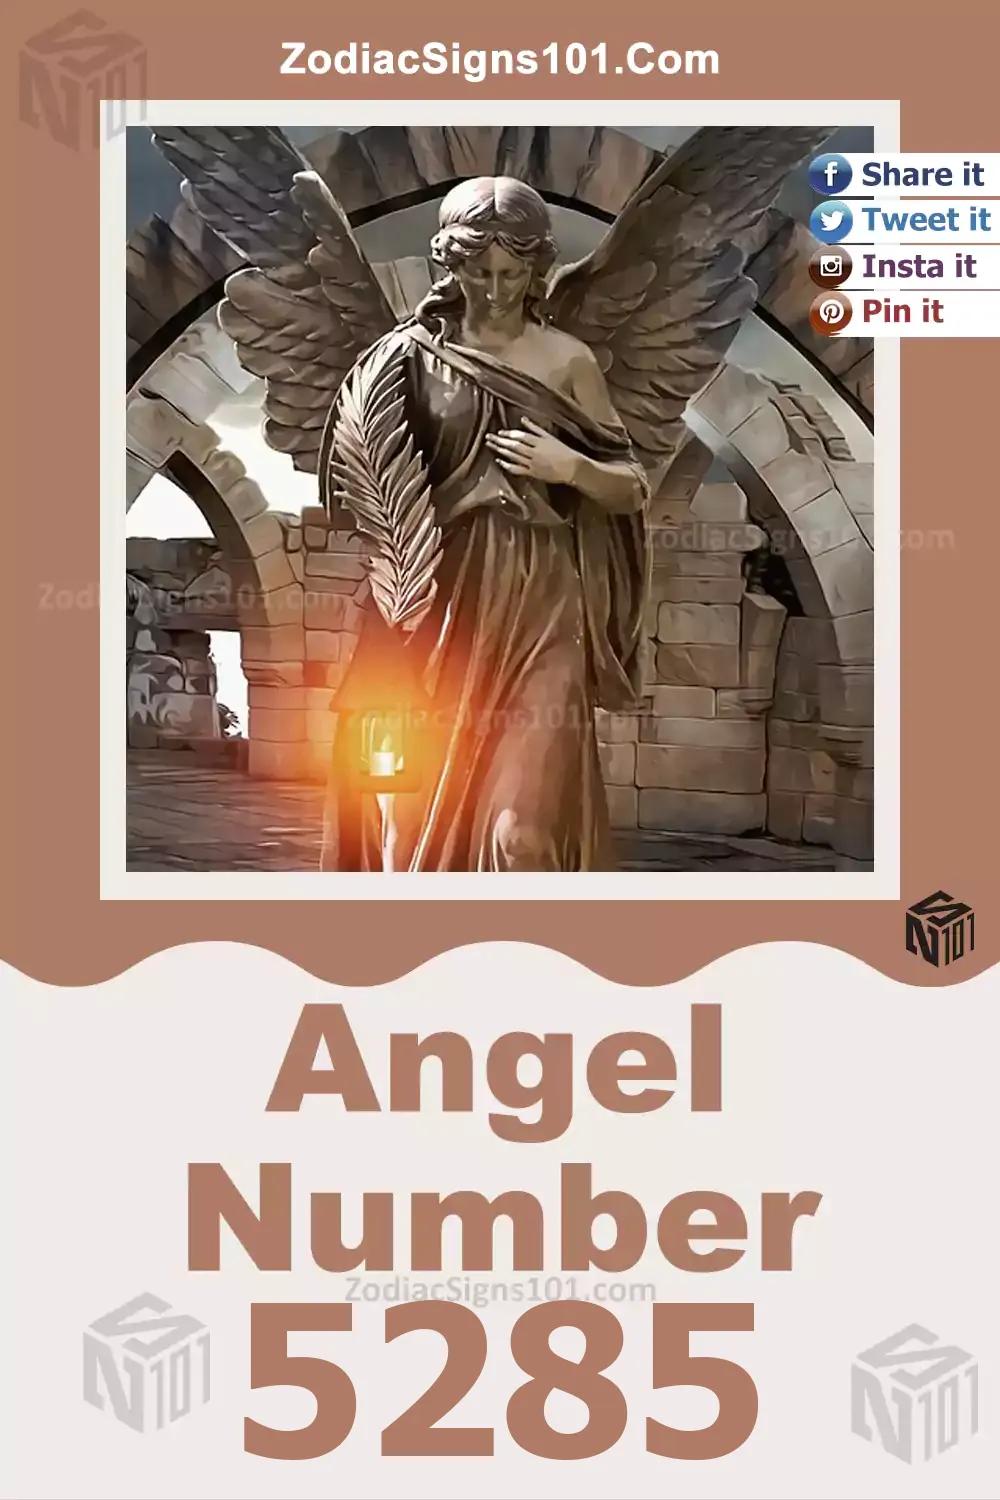 5285-Angel-Number-Meaning.jpg